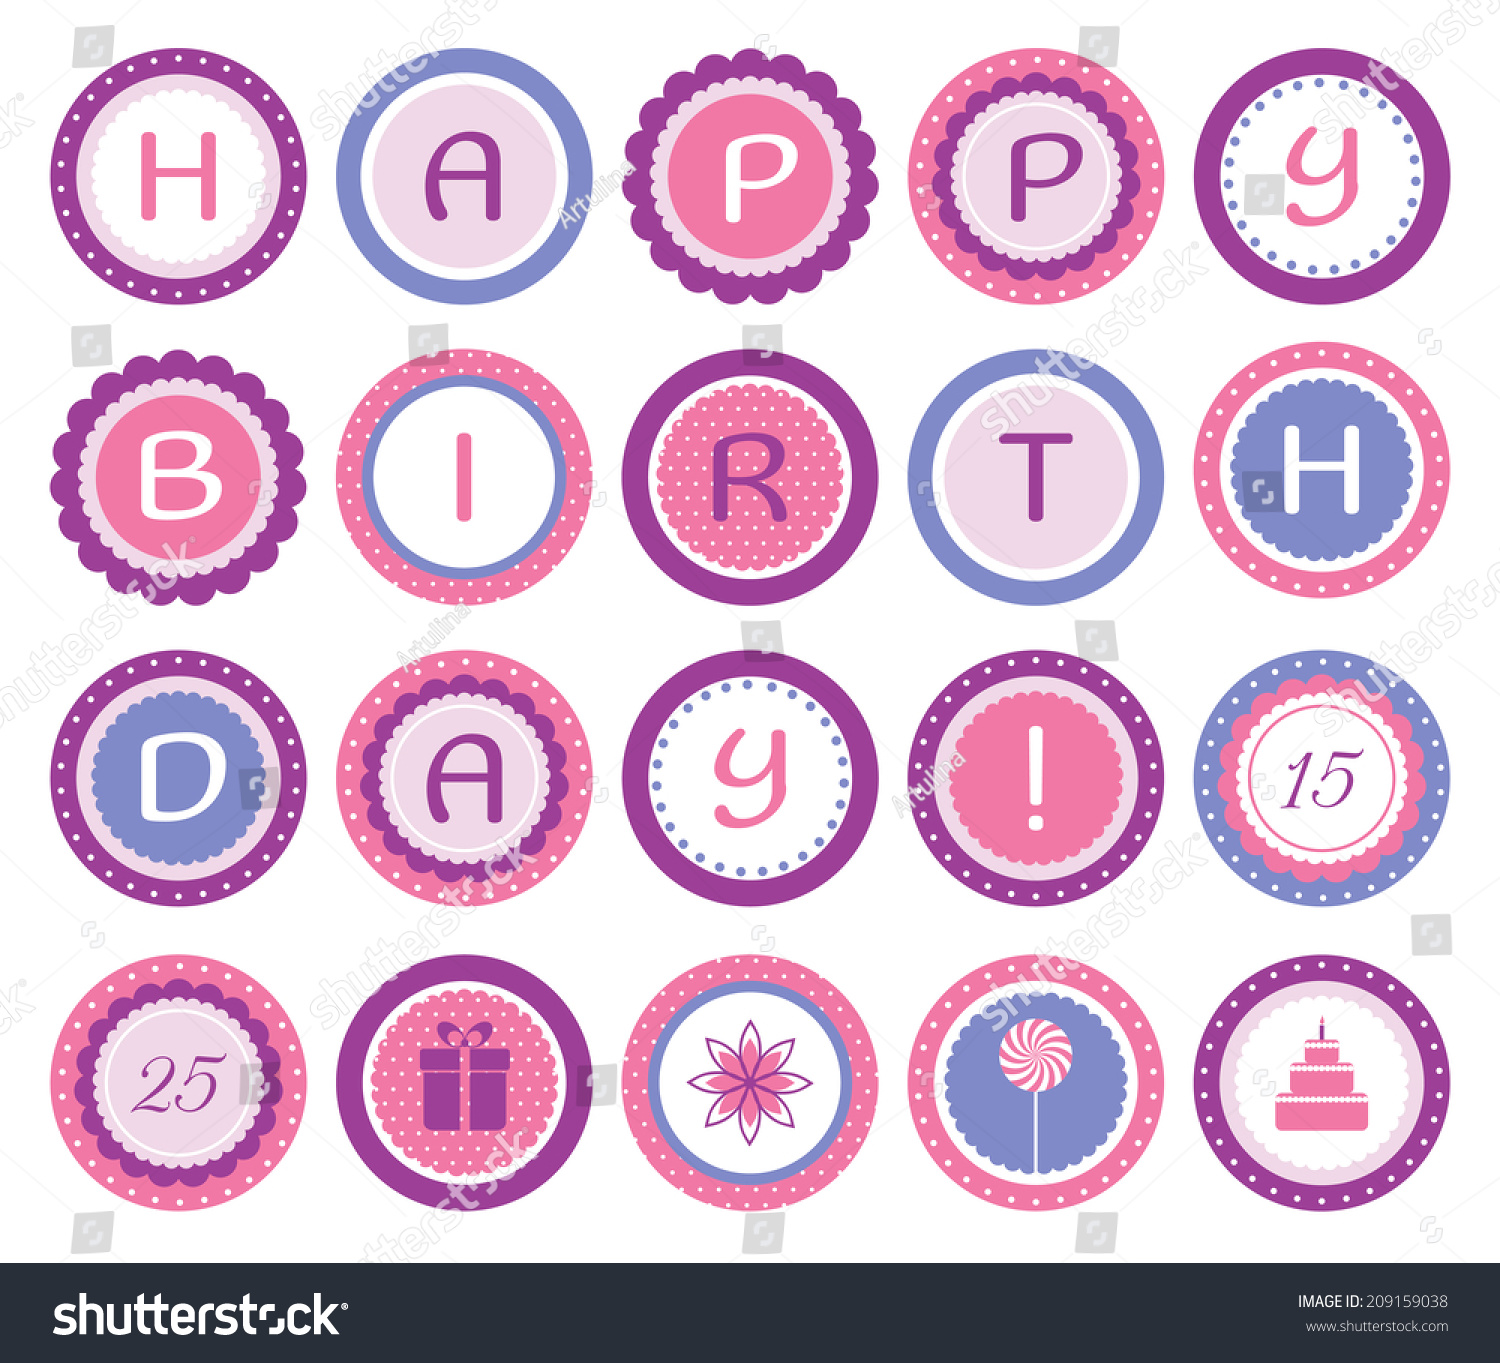 Happy Birthday Toppers Stock Vector Illustration 209159038 : Shutterstock